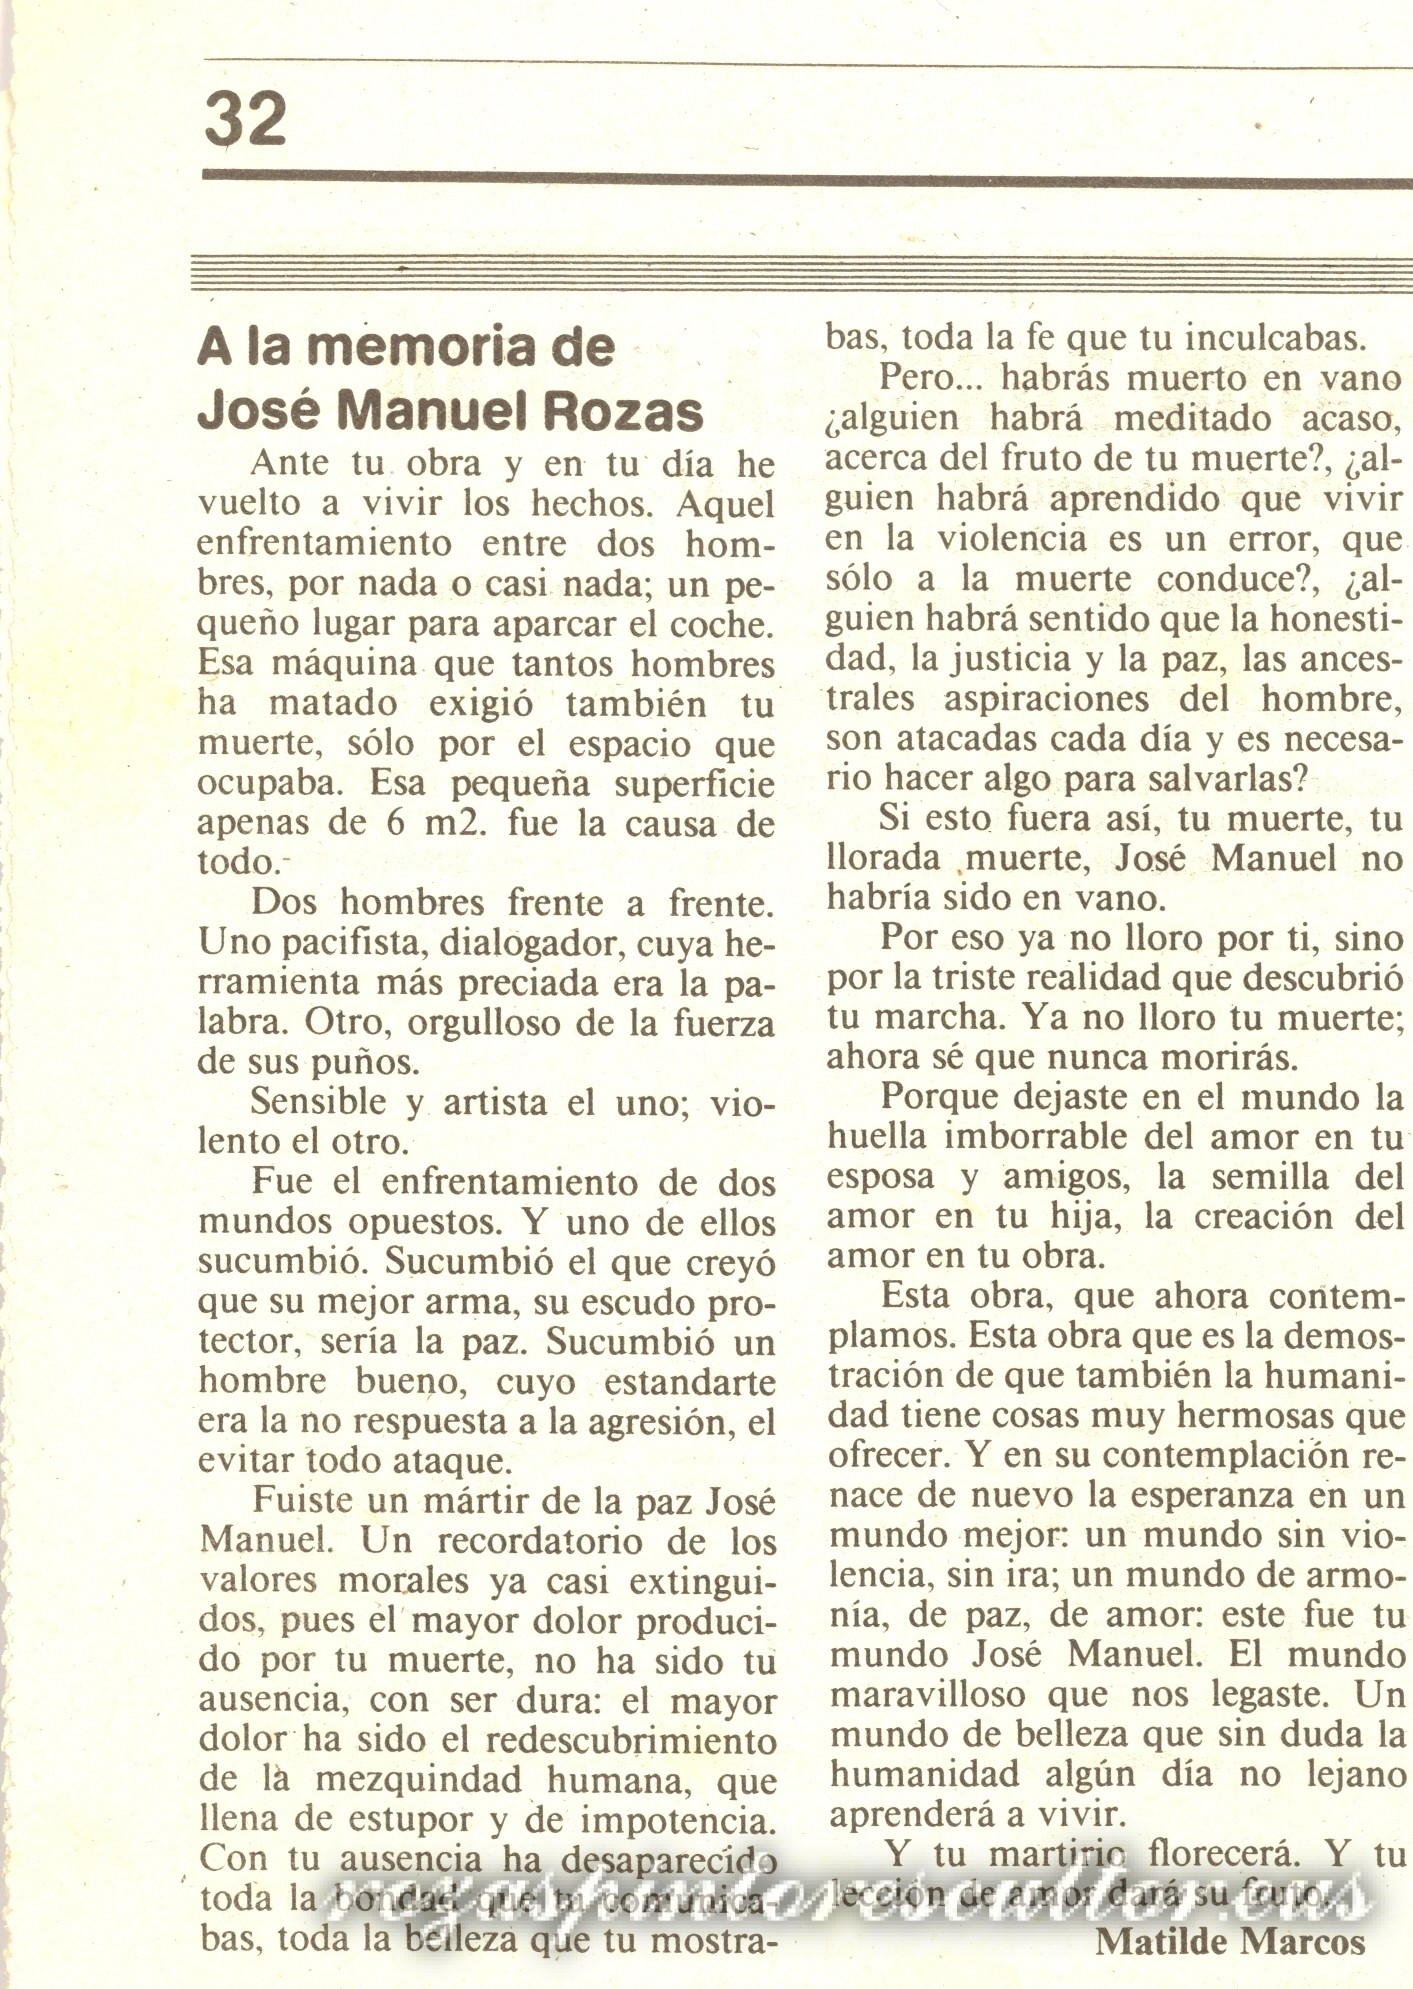 1988 El Correo – Jose Manuel Rozas gogoan – Matilde Marcos